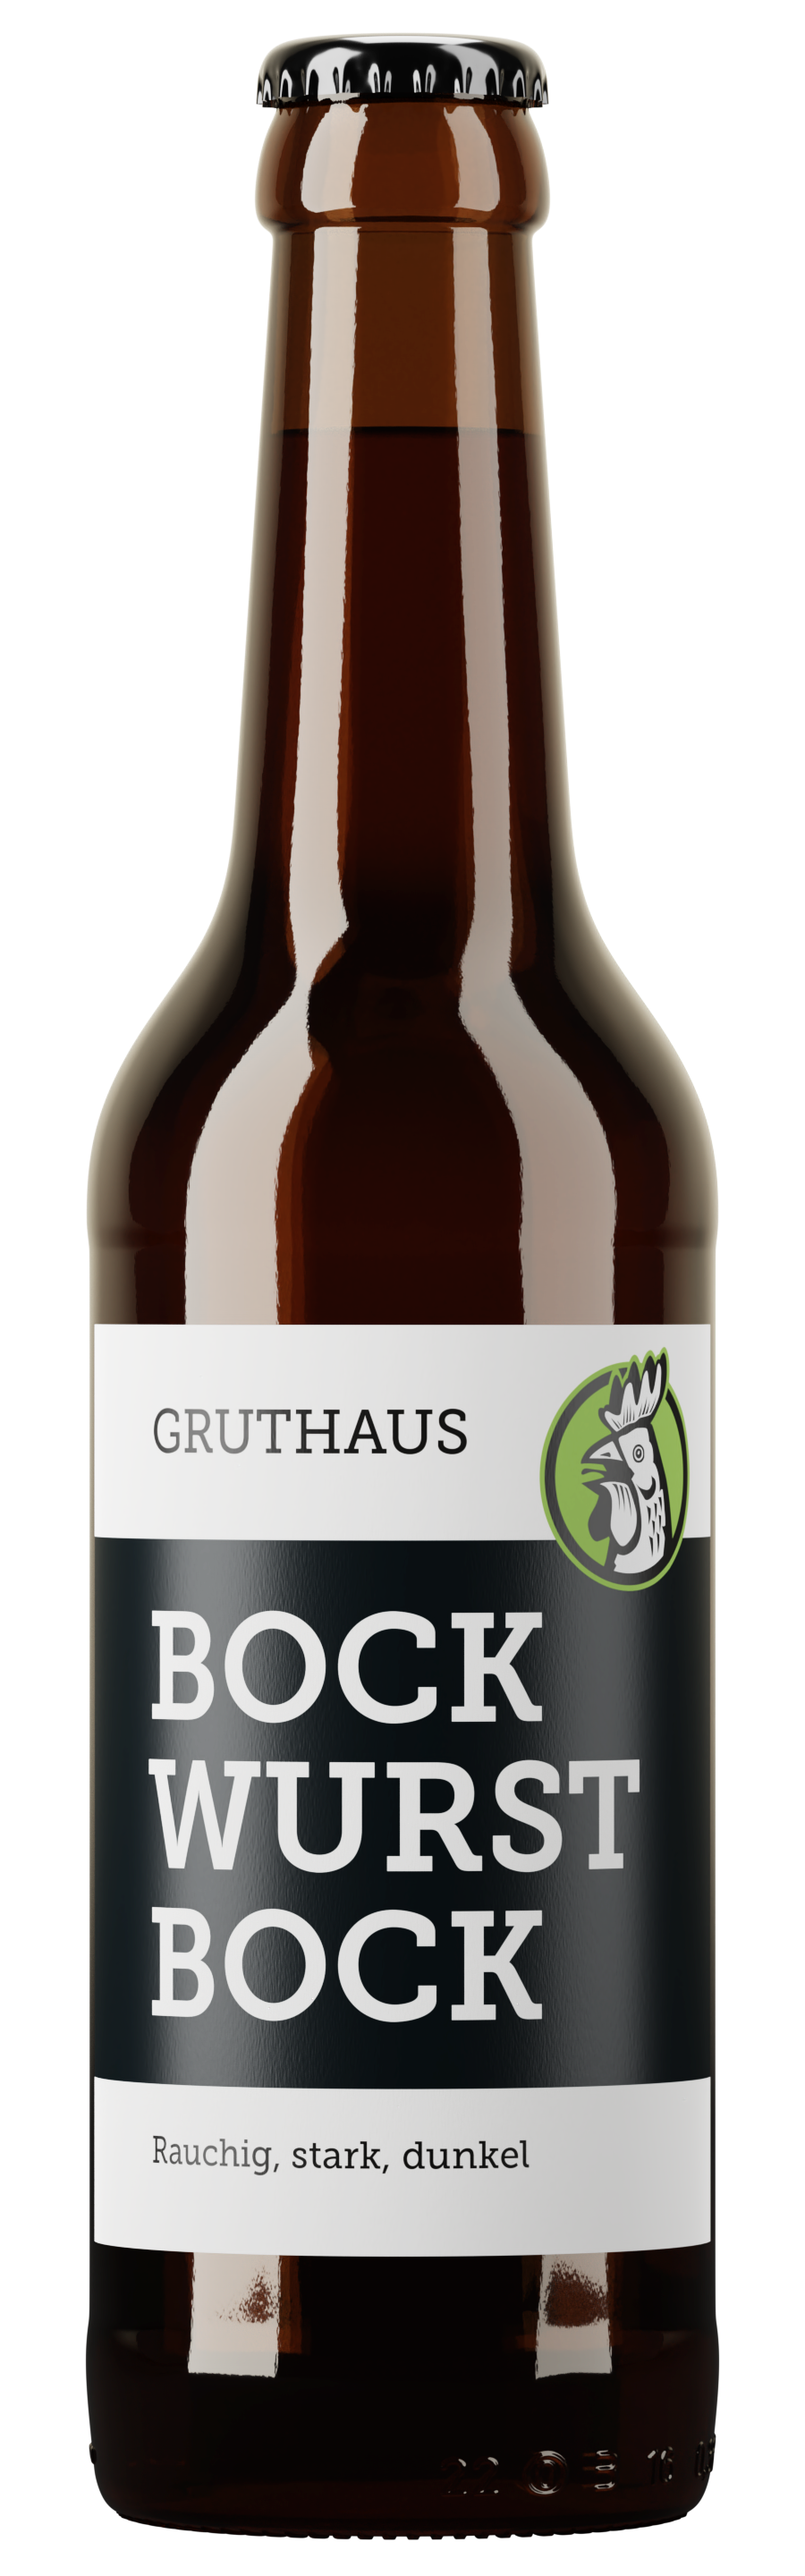 Bockwurst Bock Gruthaus Brauerei Munster